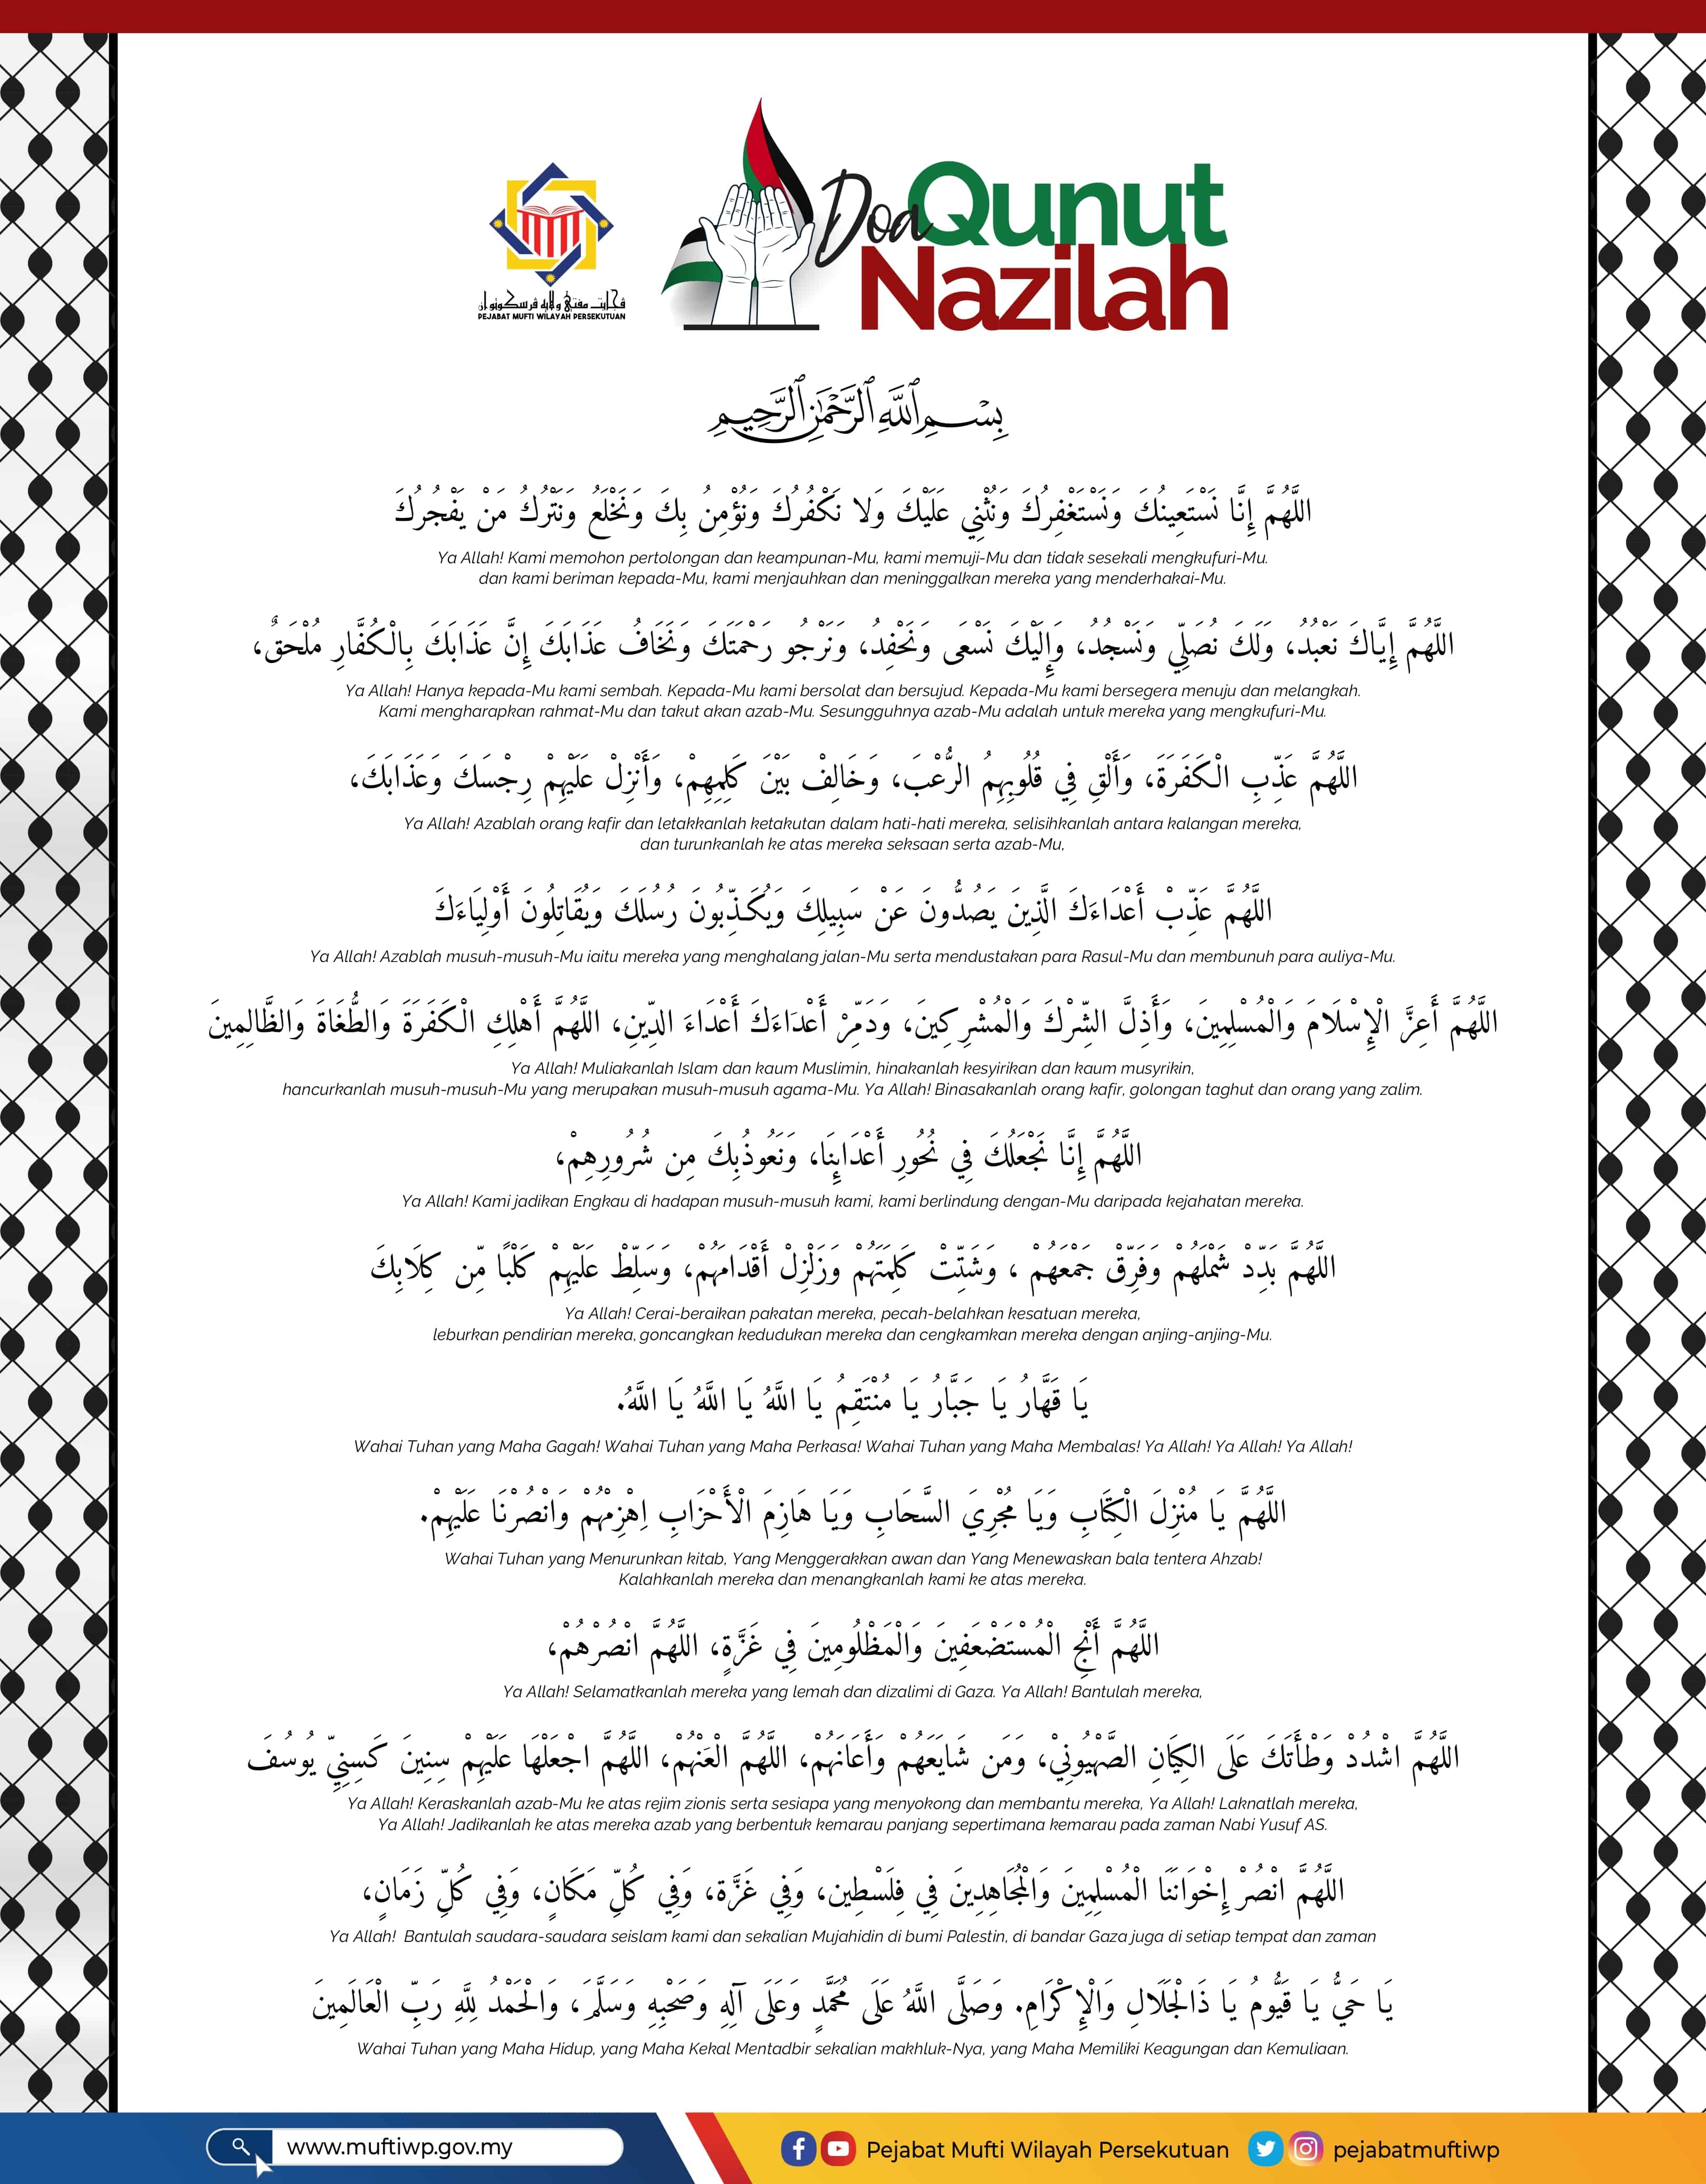 Doa qunut nazilah desktop version